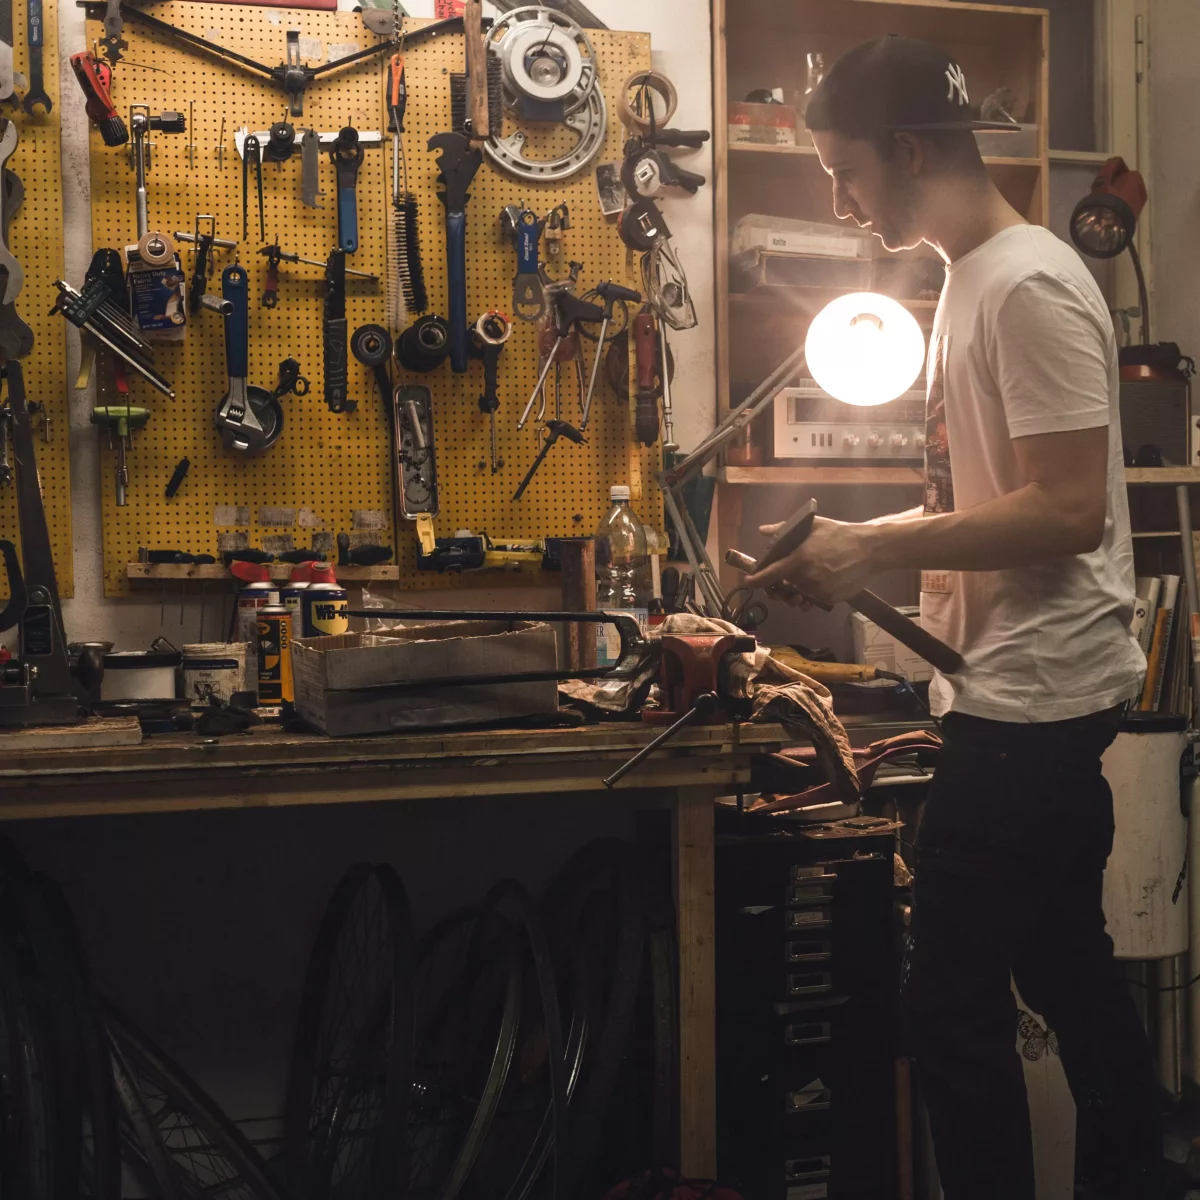 KISKA paint technician repairing a bike after work in Salzburg, Austria